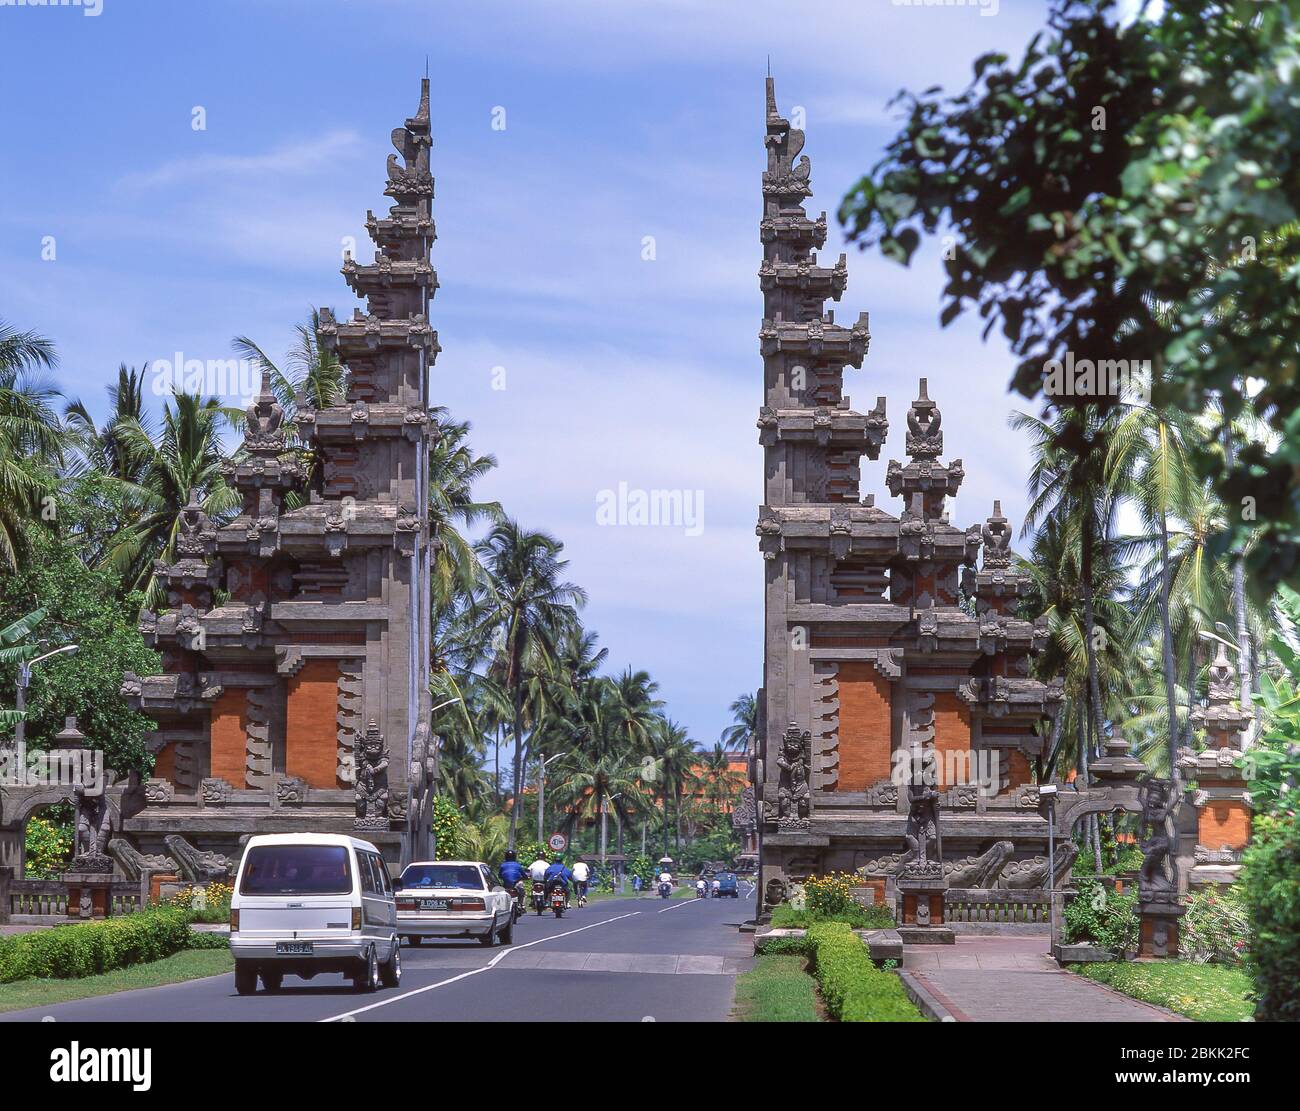 Ornate entrance gate on main road into Nusa Dua Resort, Bali, Republic of Indonesia Stock Photo